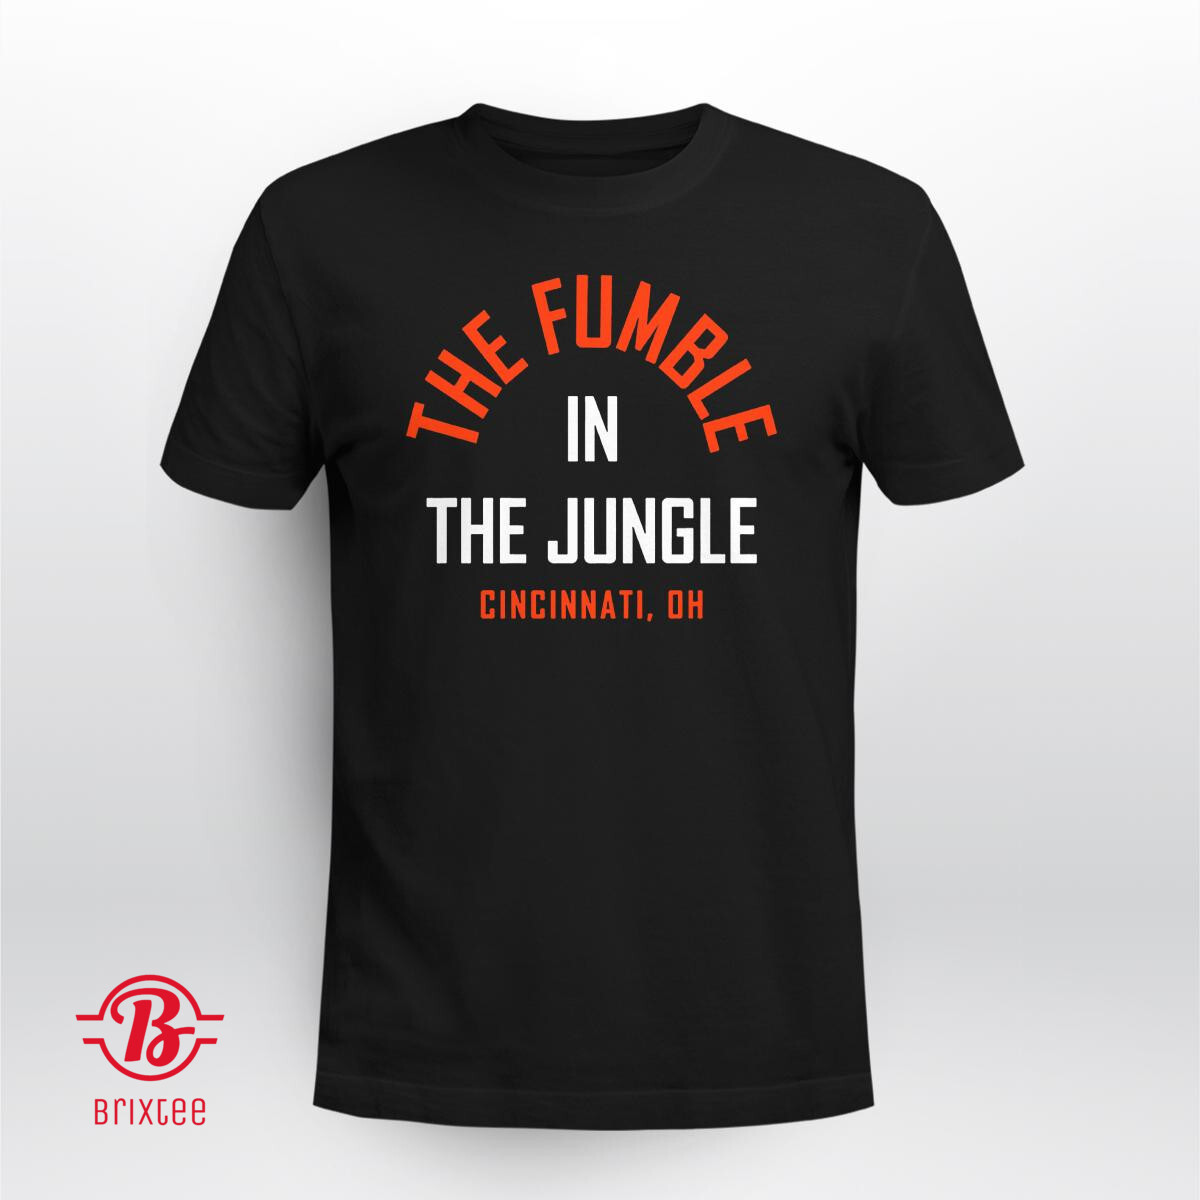 The Fumble In The Jungle - Cincinnati Bengals 